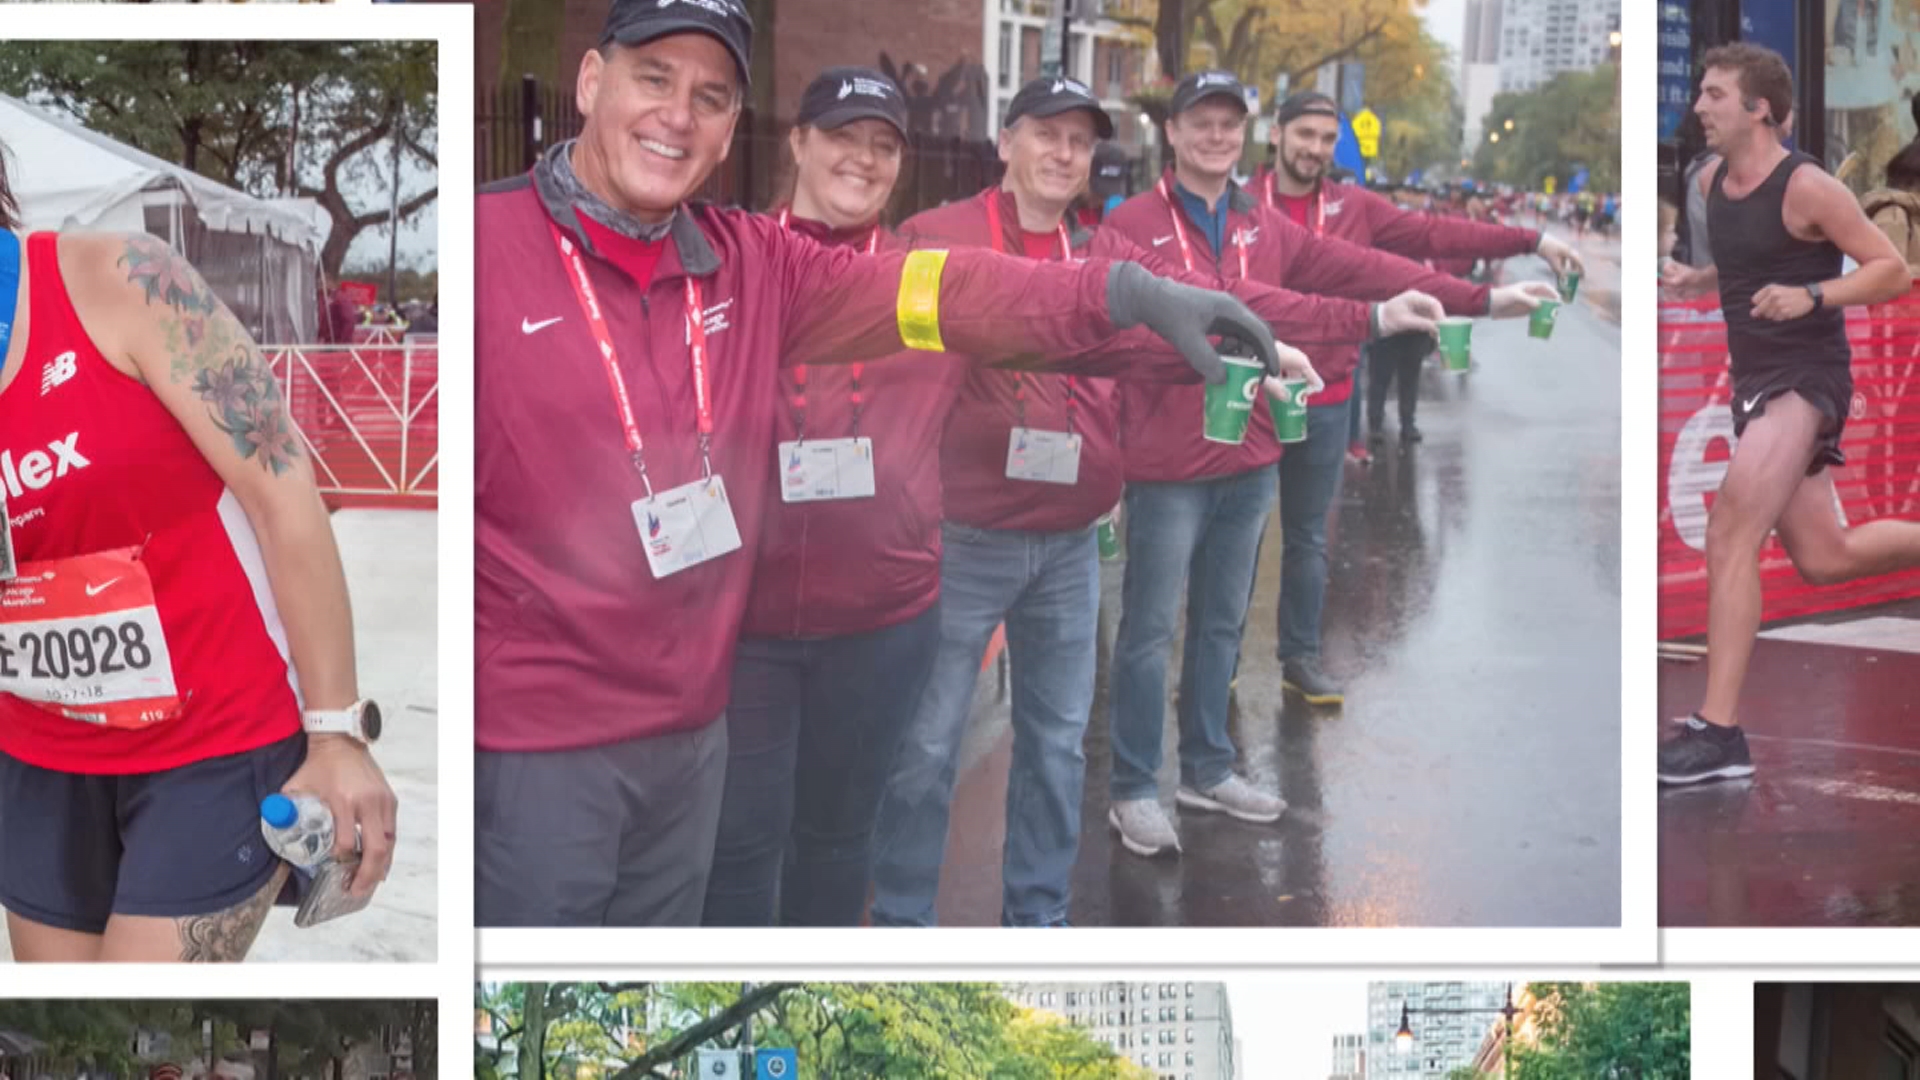 You Can Still Volunteer for the 2019 BOA Chicago Marathon